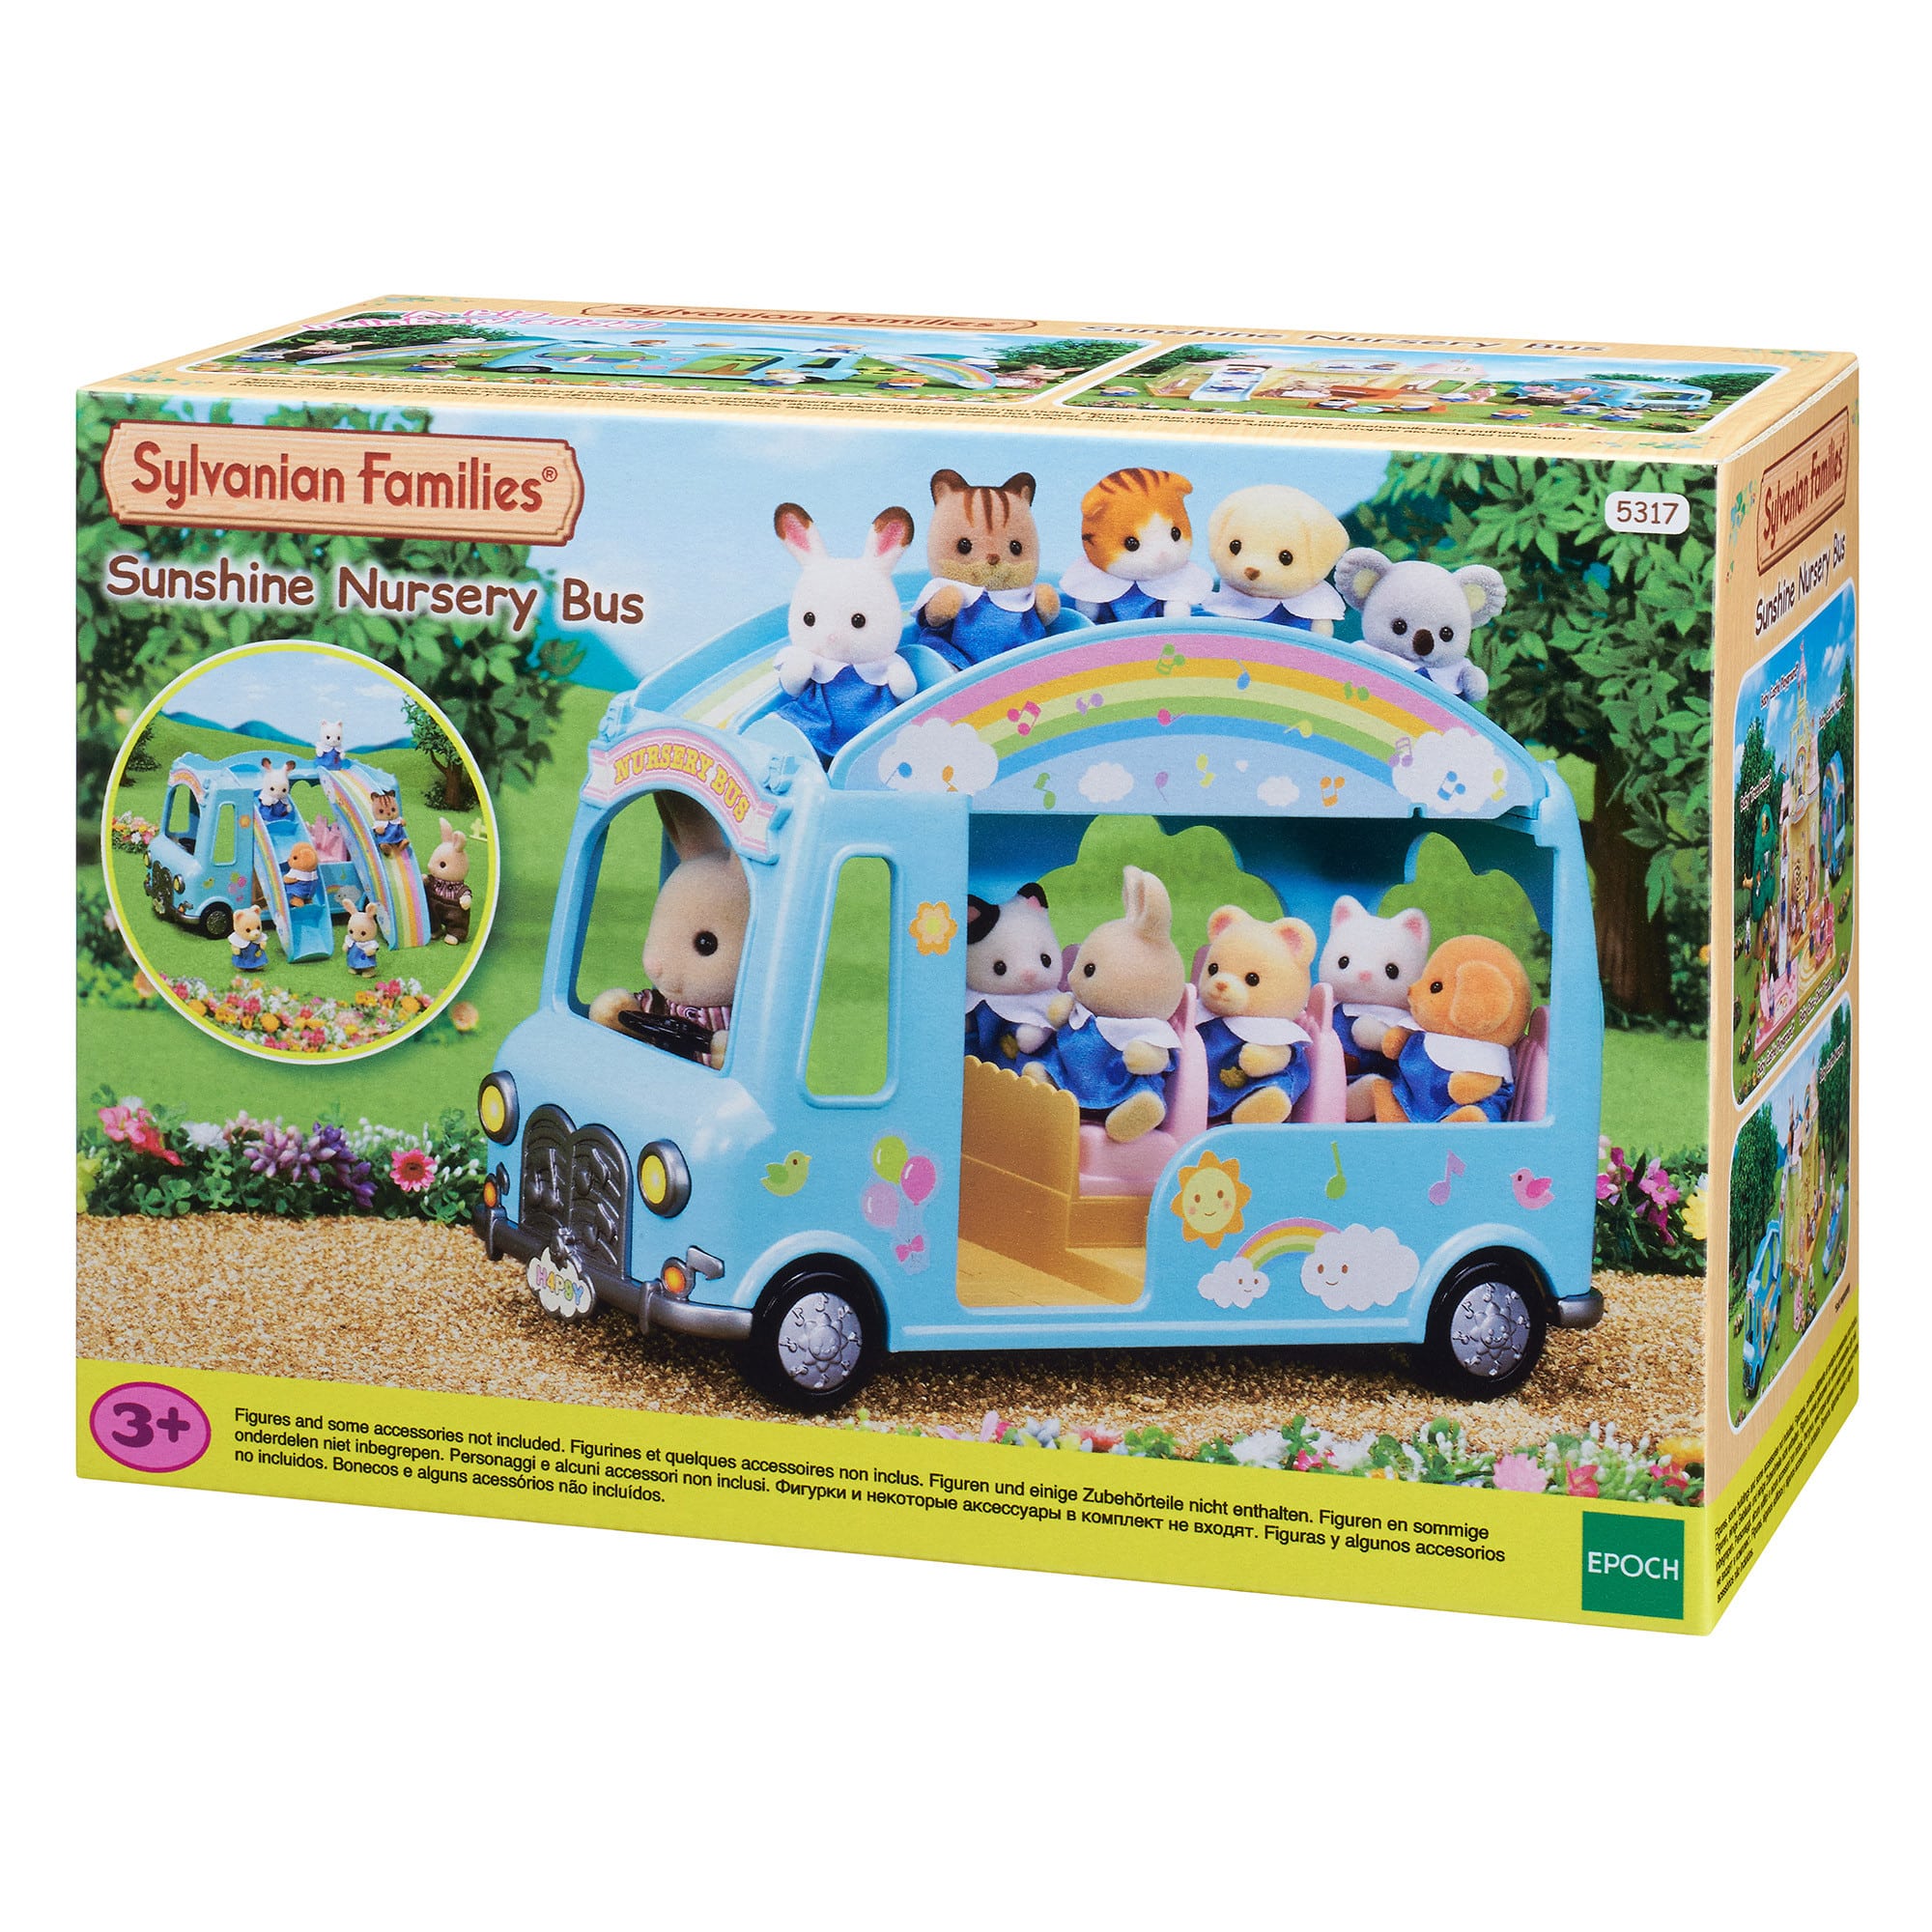 Sylvanian Families - Nursery School Bus SF5317